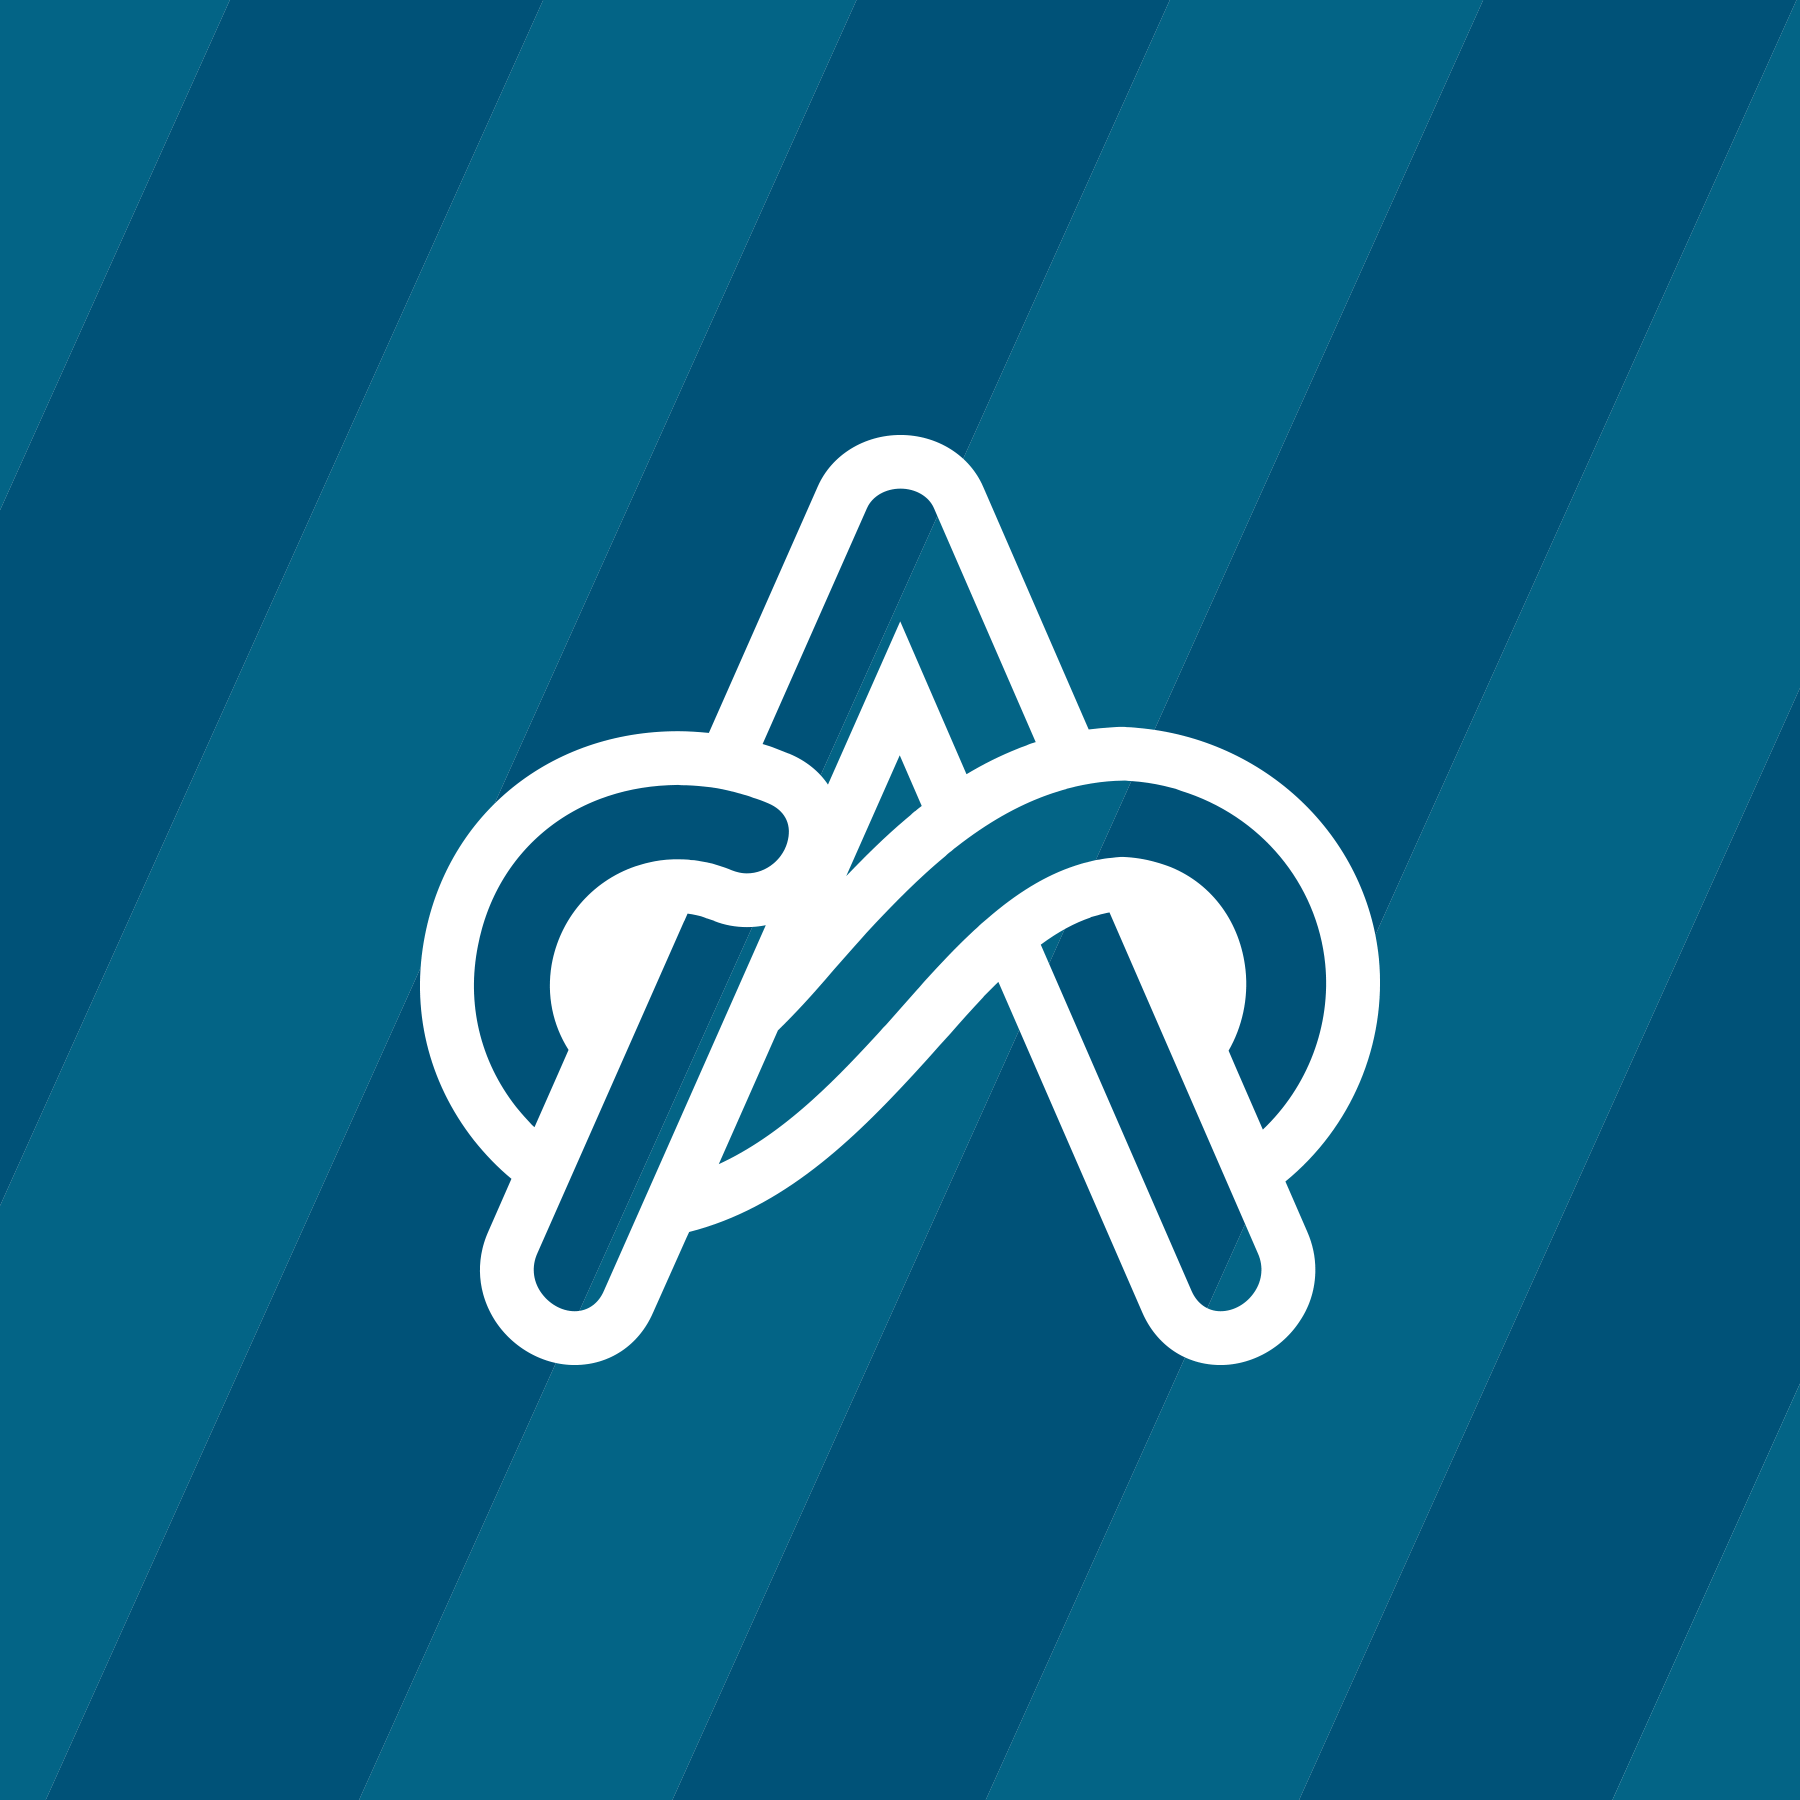 sport organisation logo design icon - white on blue backgound